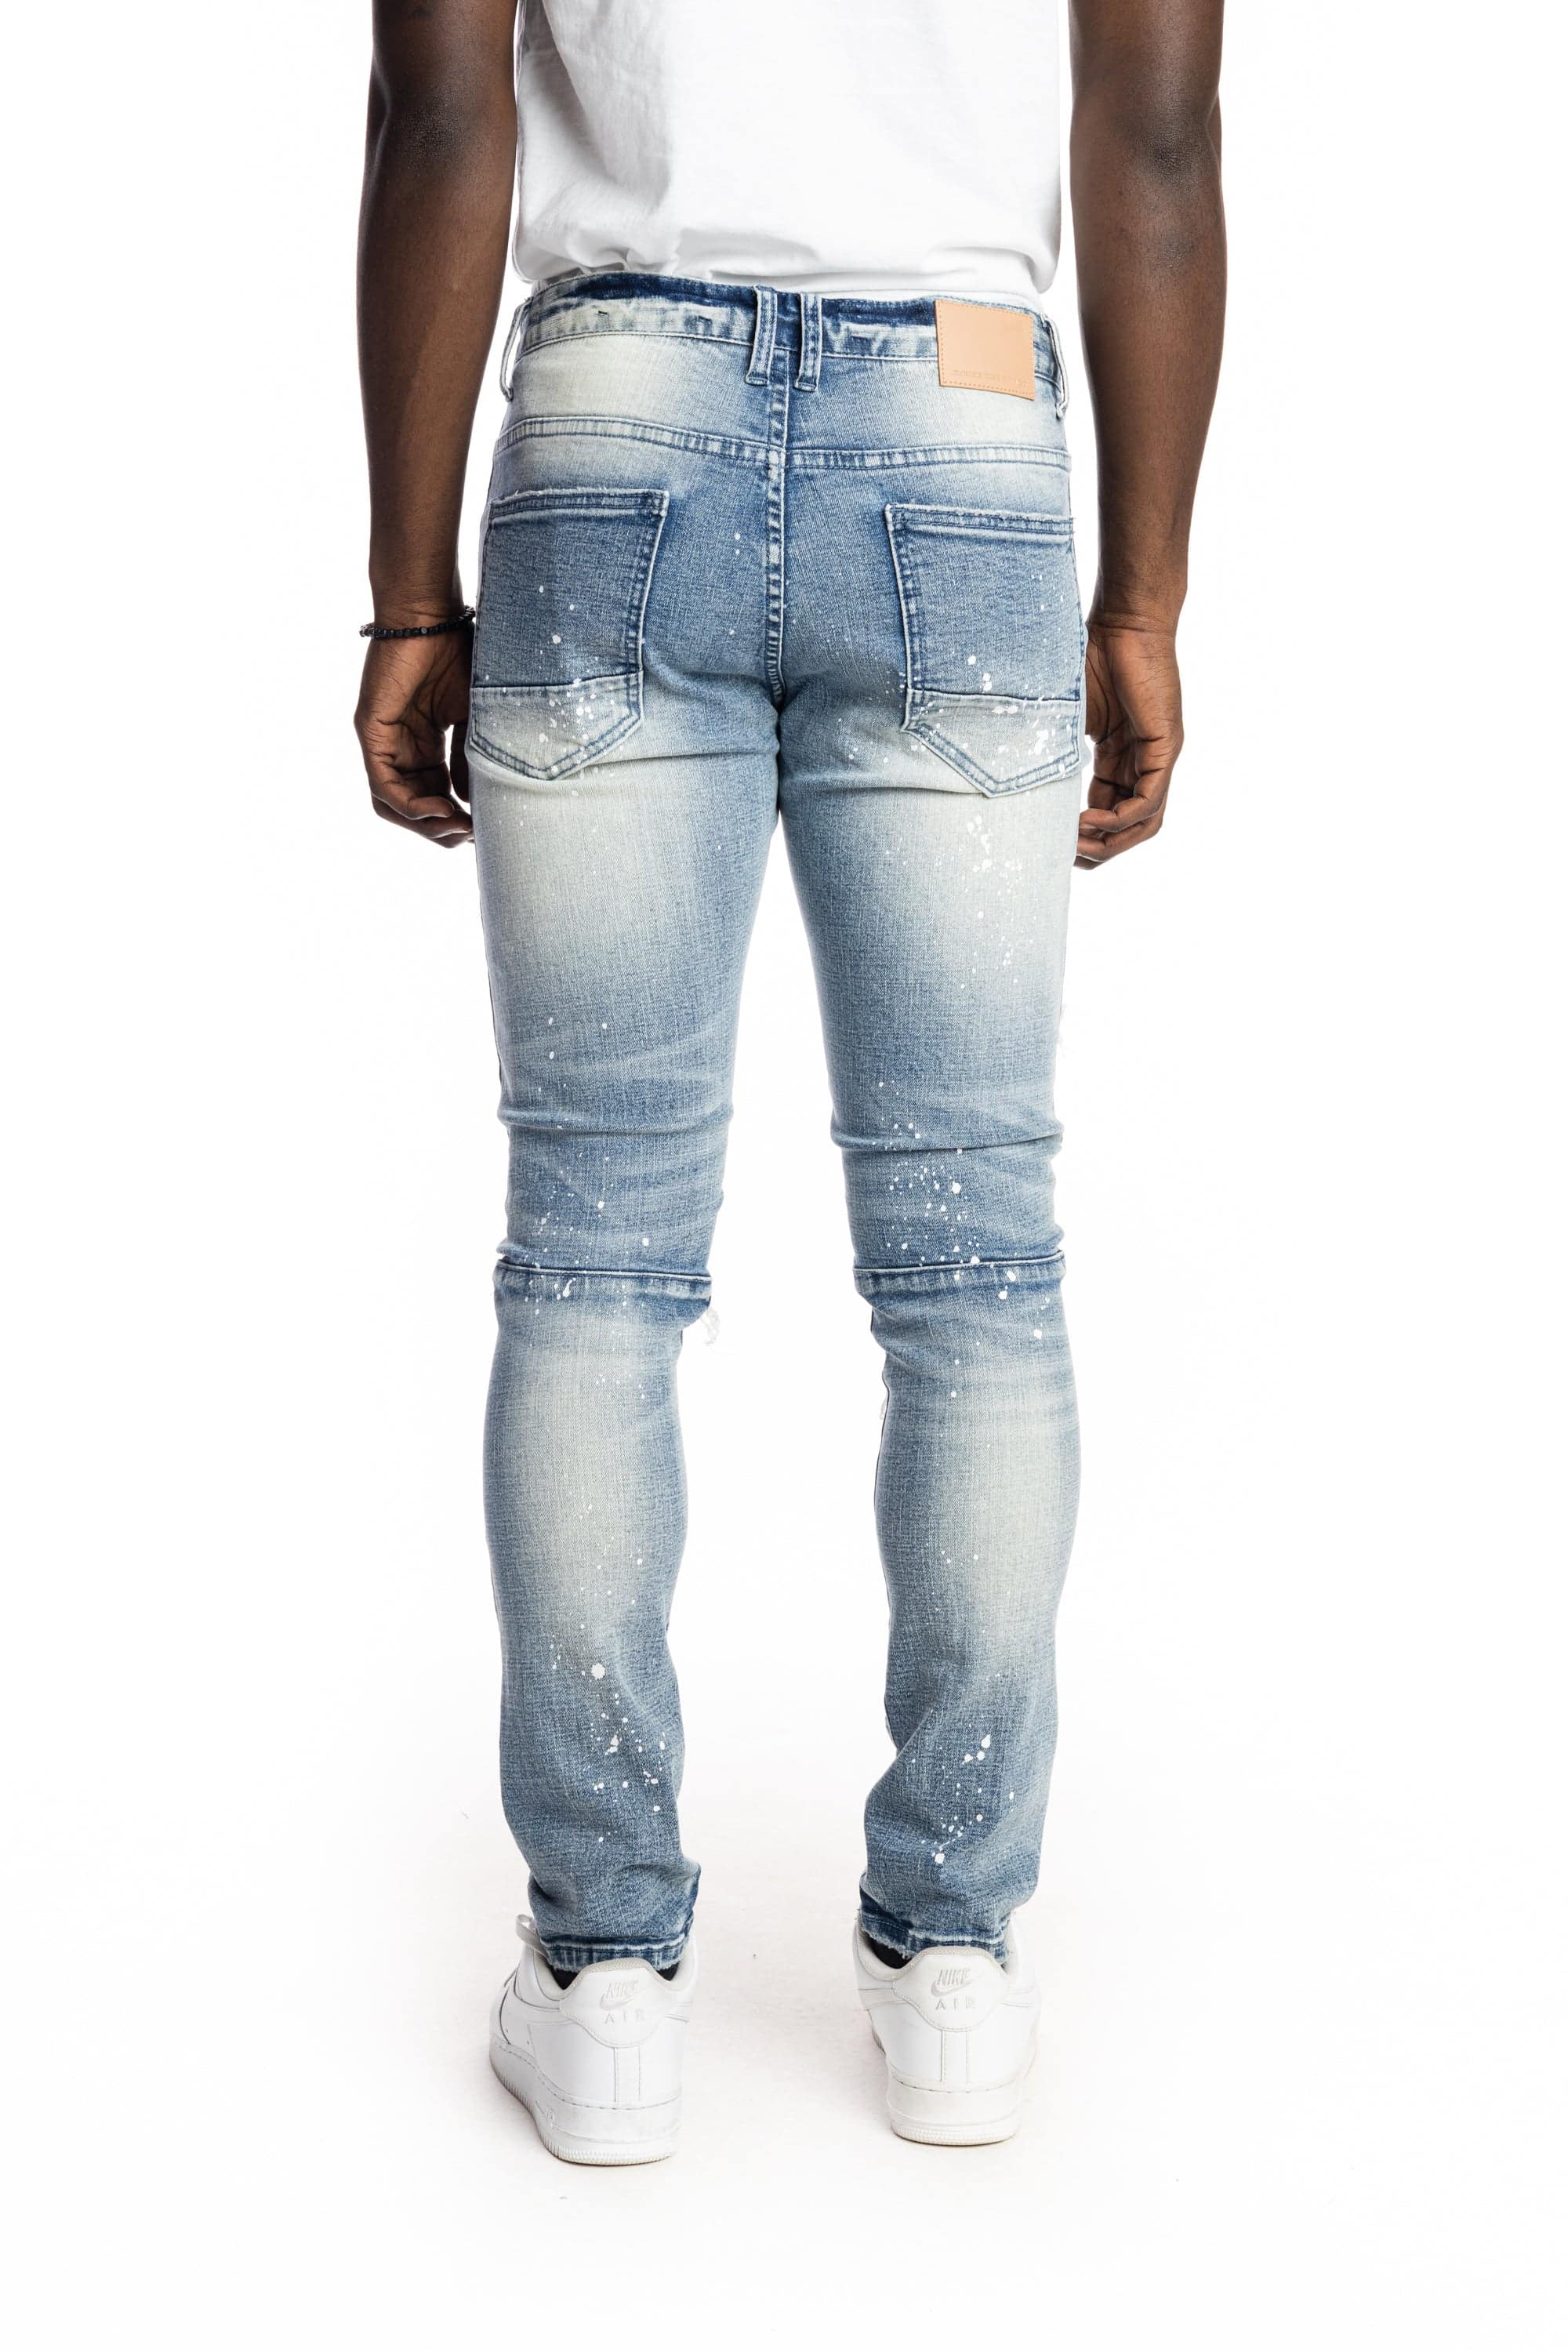 Rip And Repair Fashion Jeans Intense Blue - Smoke Rise